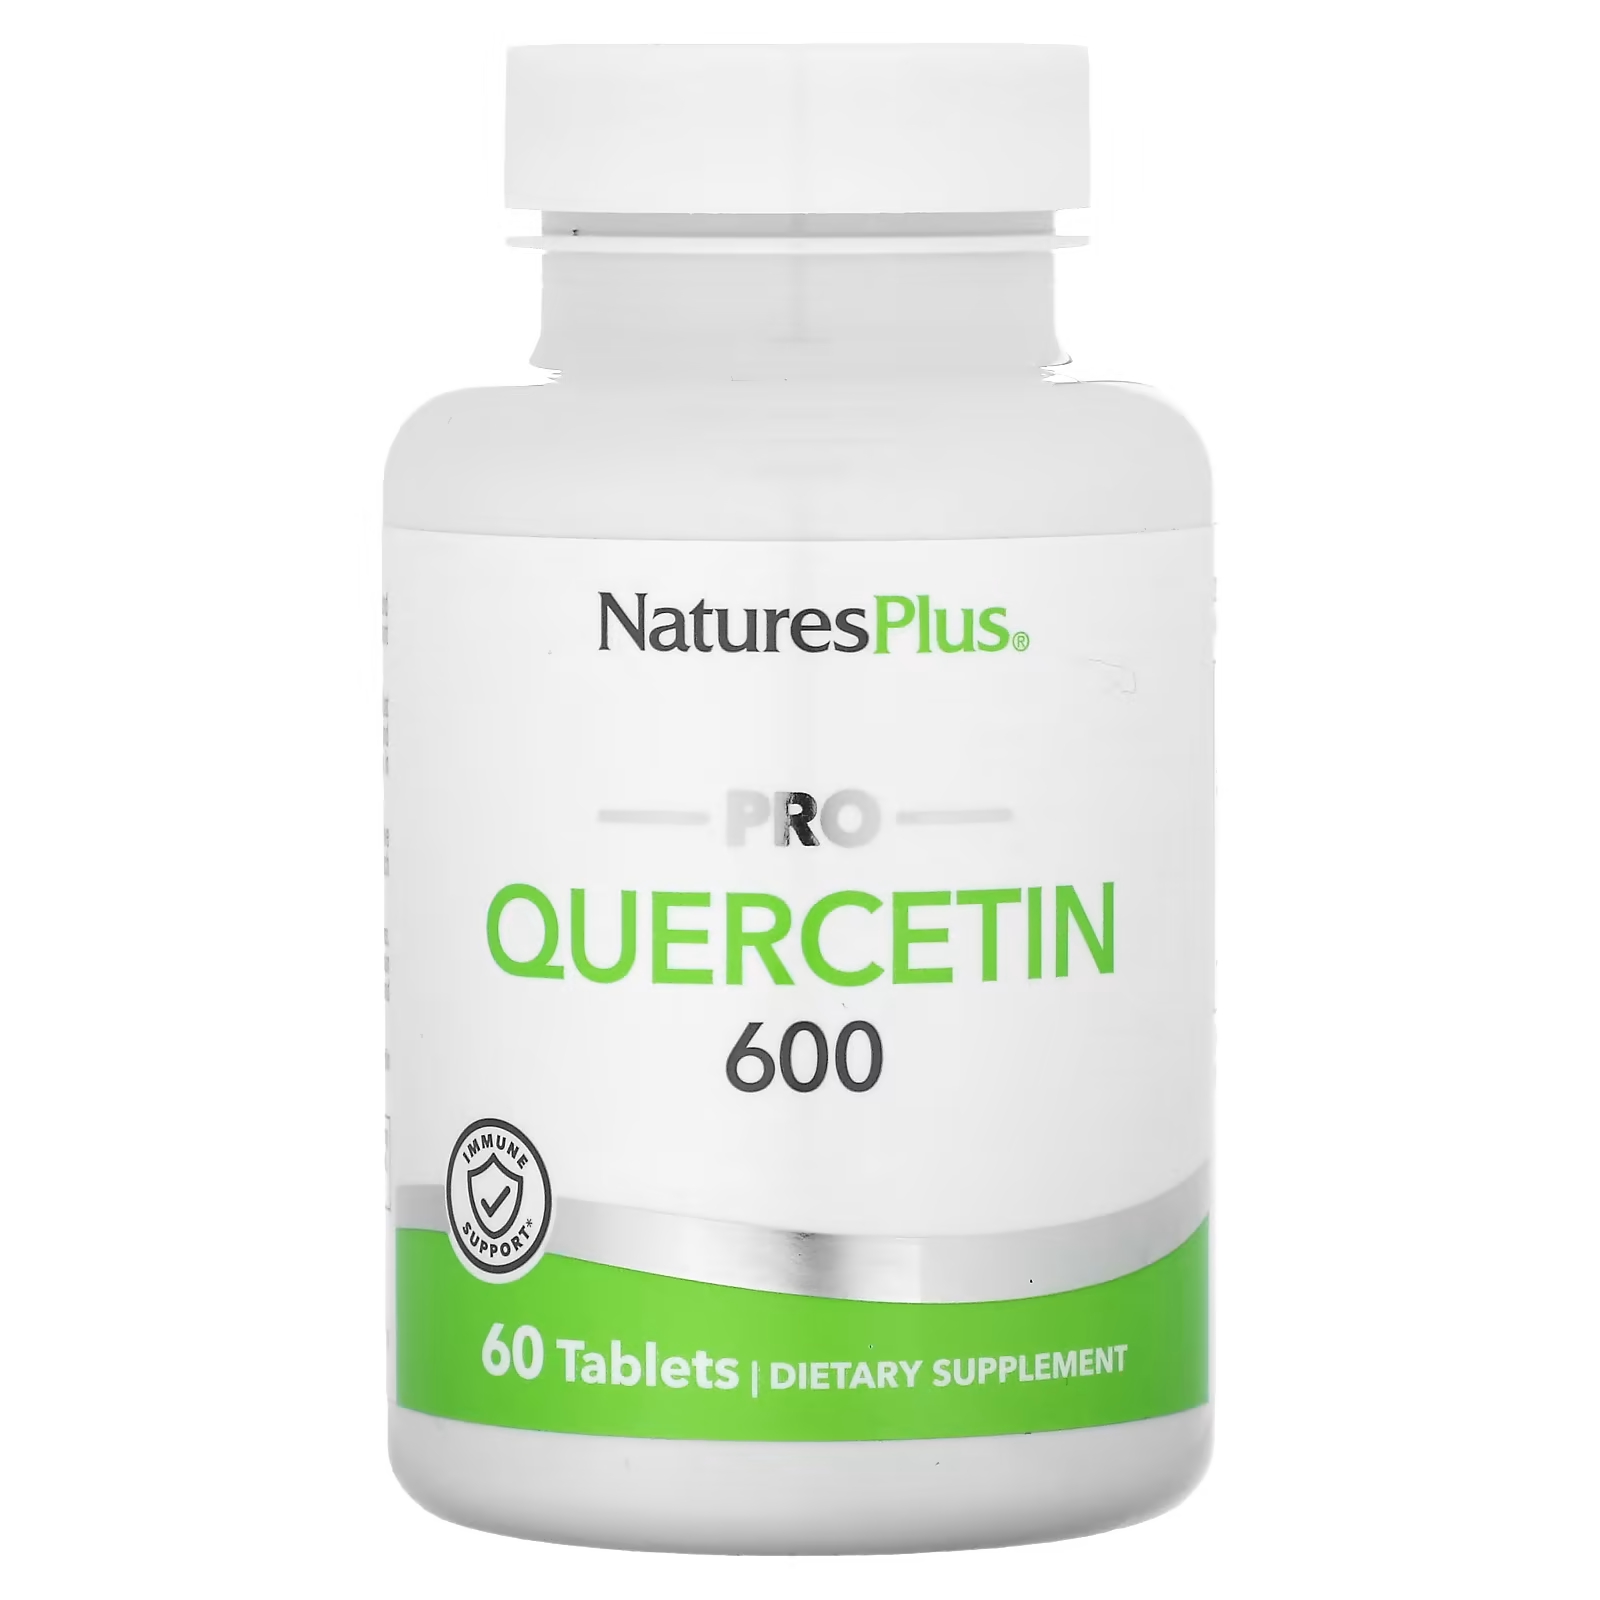 NaturesPlus Pro Кверцетин 600 60 таблеток